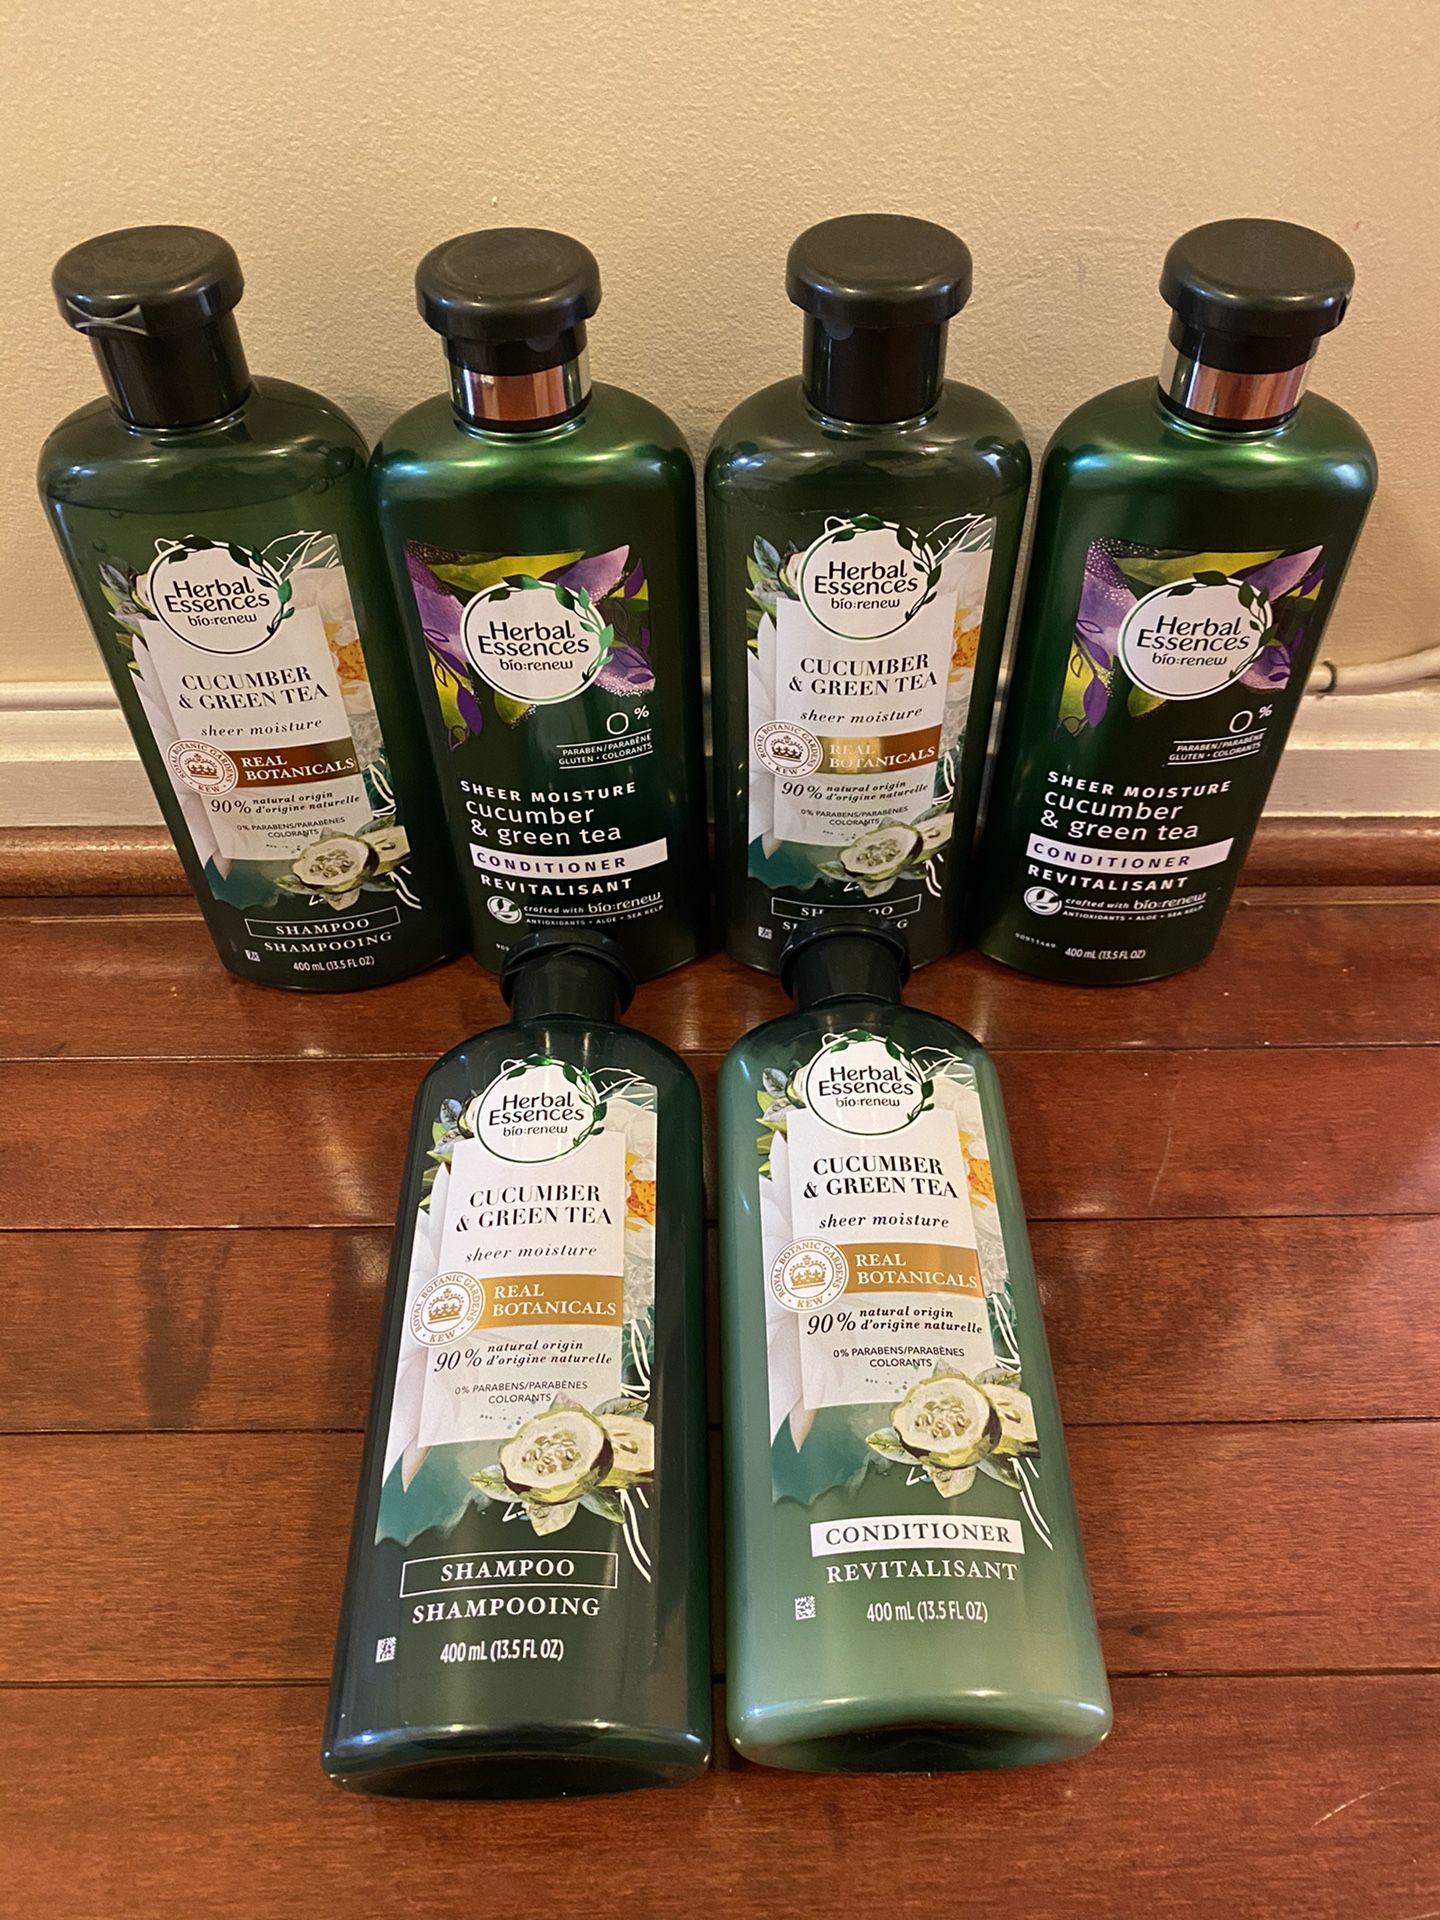 6 Herbal essence shampoo & conditioner